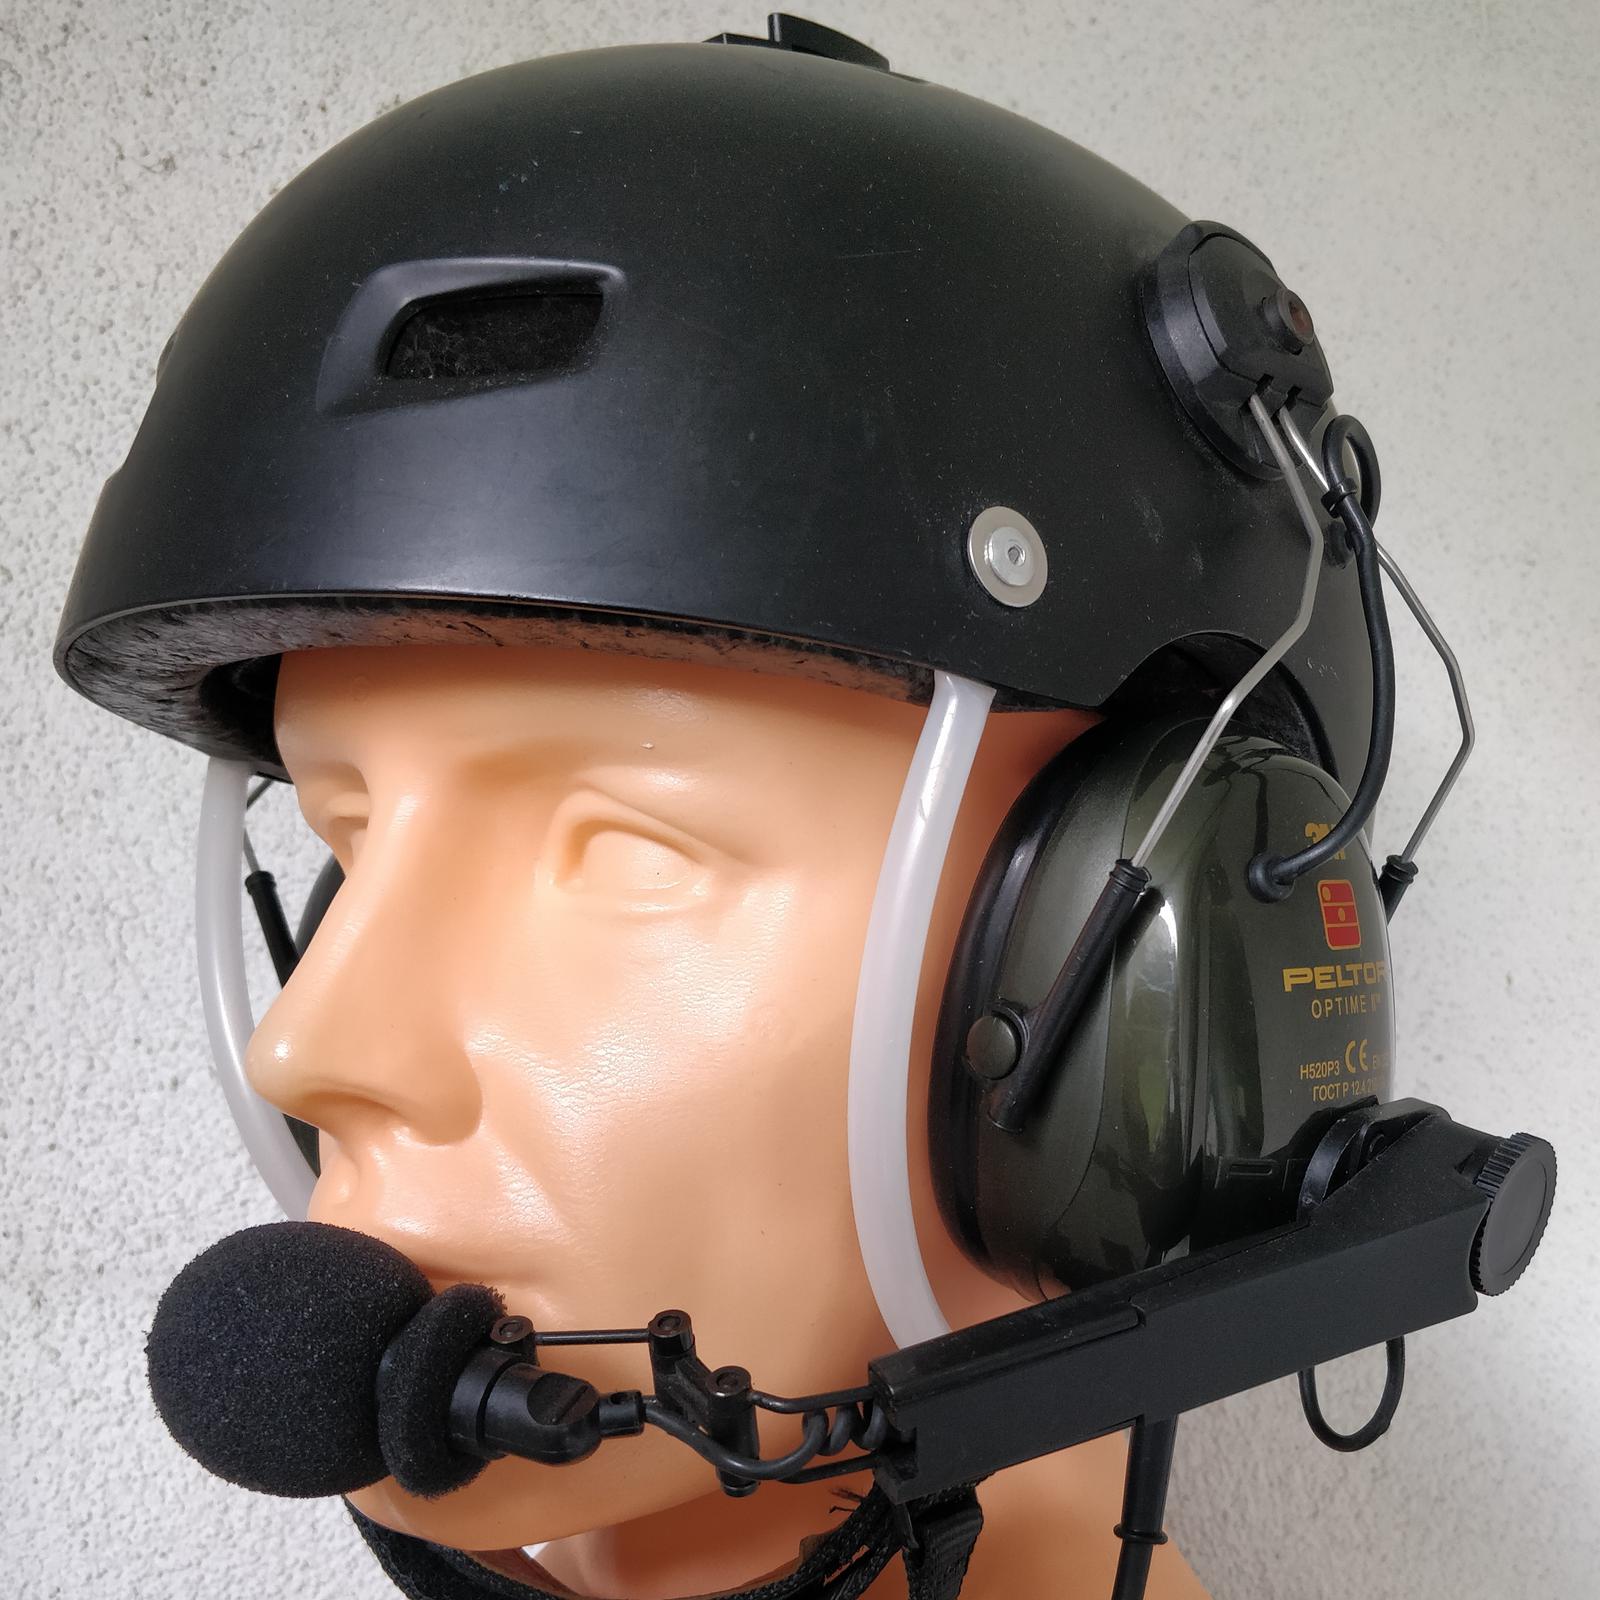 Best private pilot headset 2